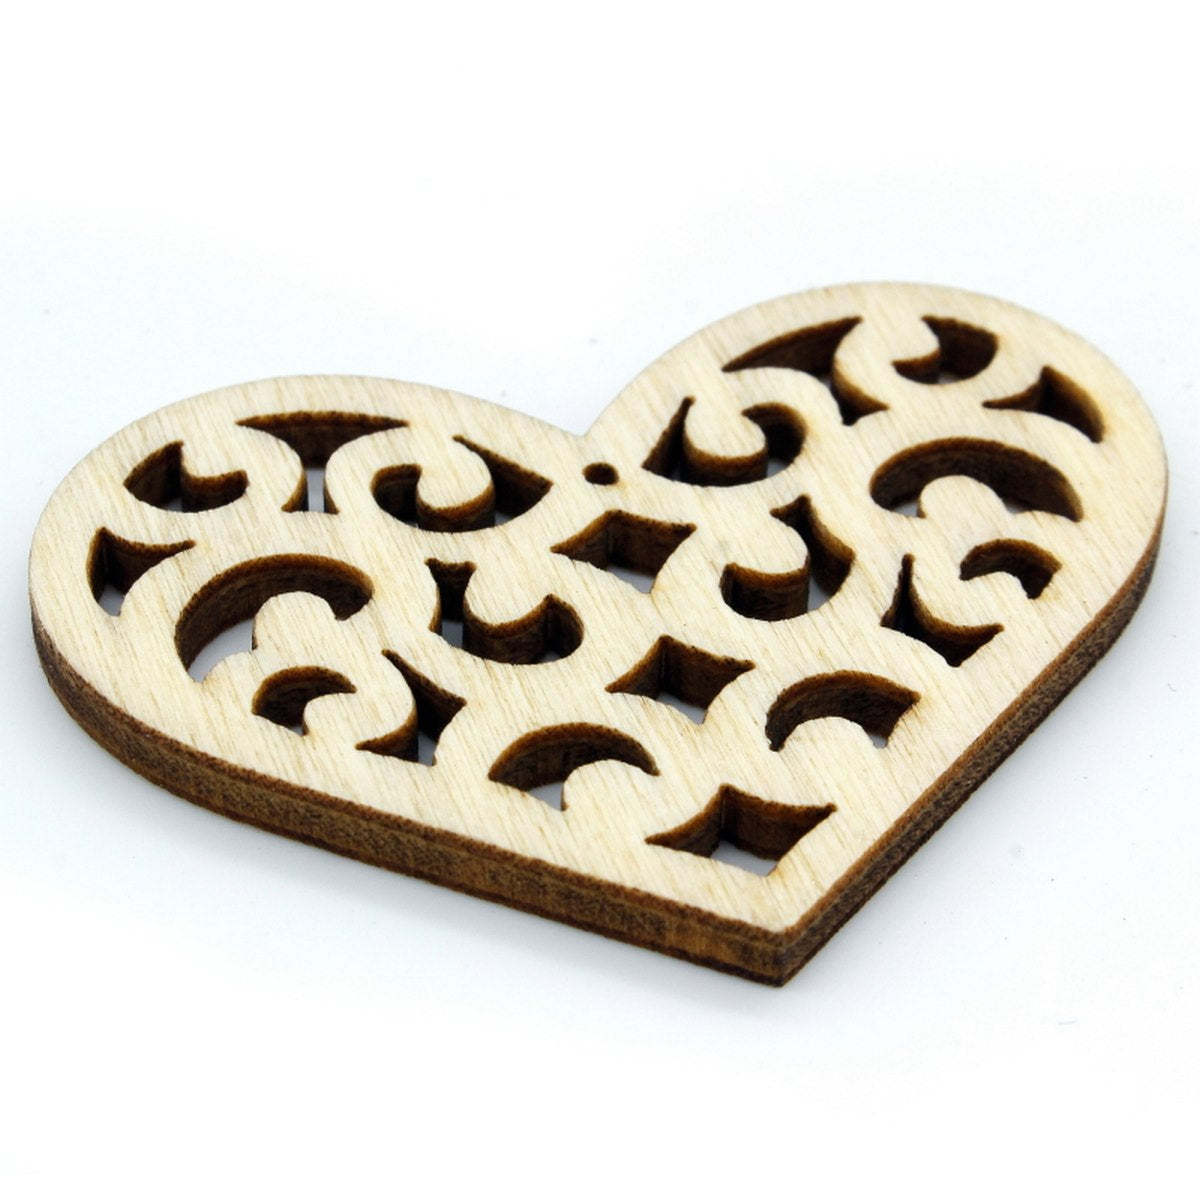 jags-mumbai MDF & wooden Crafts Wooden Craft Heart Design Big 6pcs WC-7